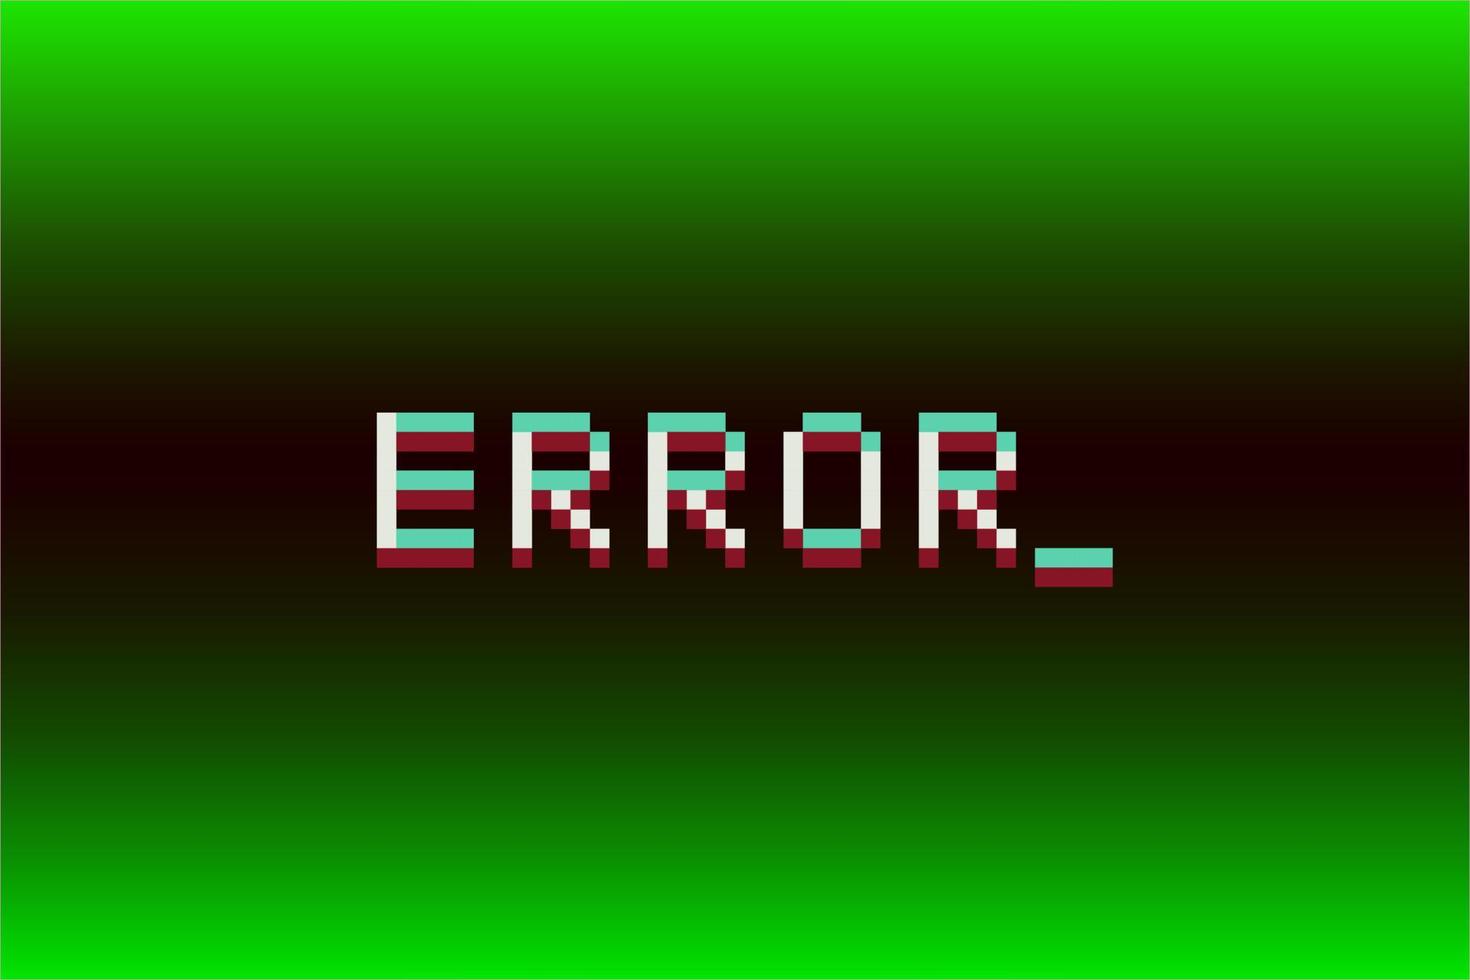 text message ERROR in 8-bit pixels. Vector illustration of text